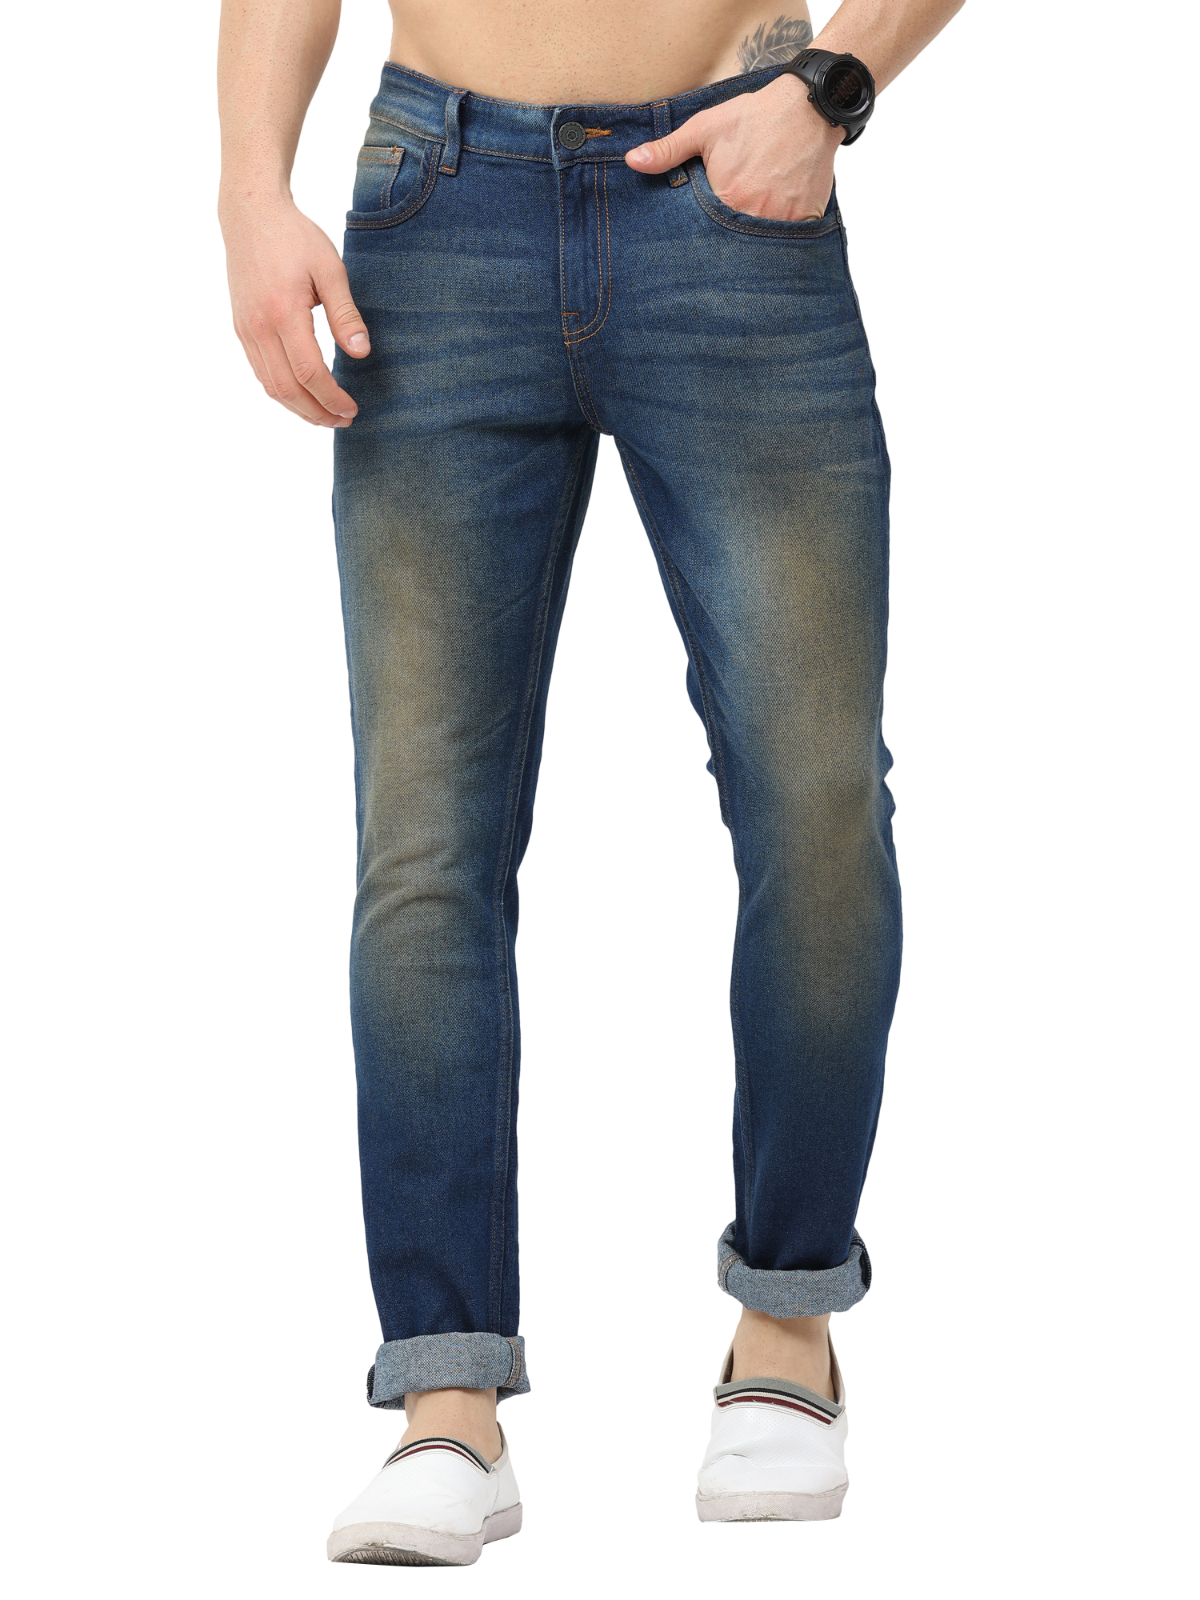 Indigo jeans for men by induspolo - Fashiokart